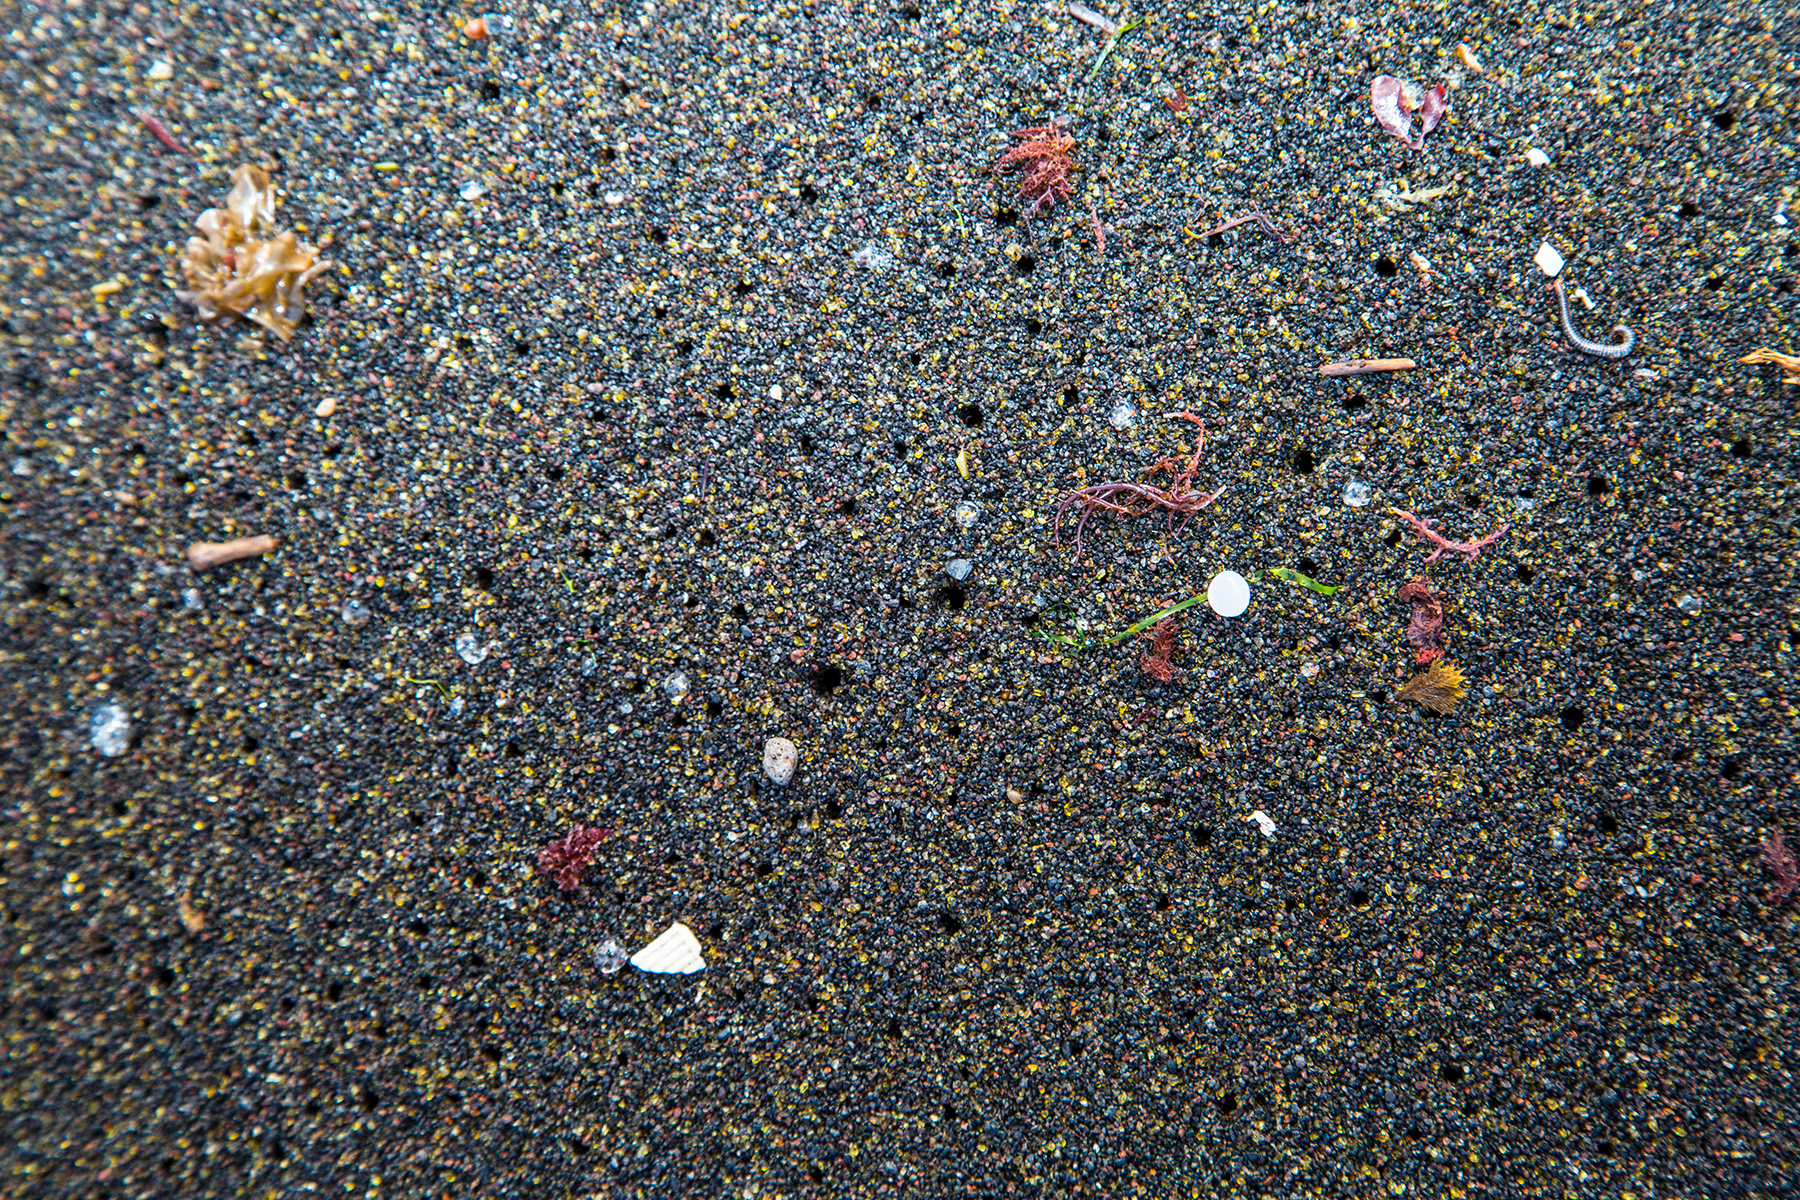 Small Plastic Pollution on SA Beaches